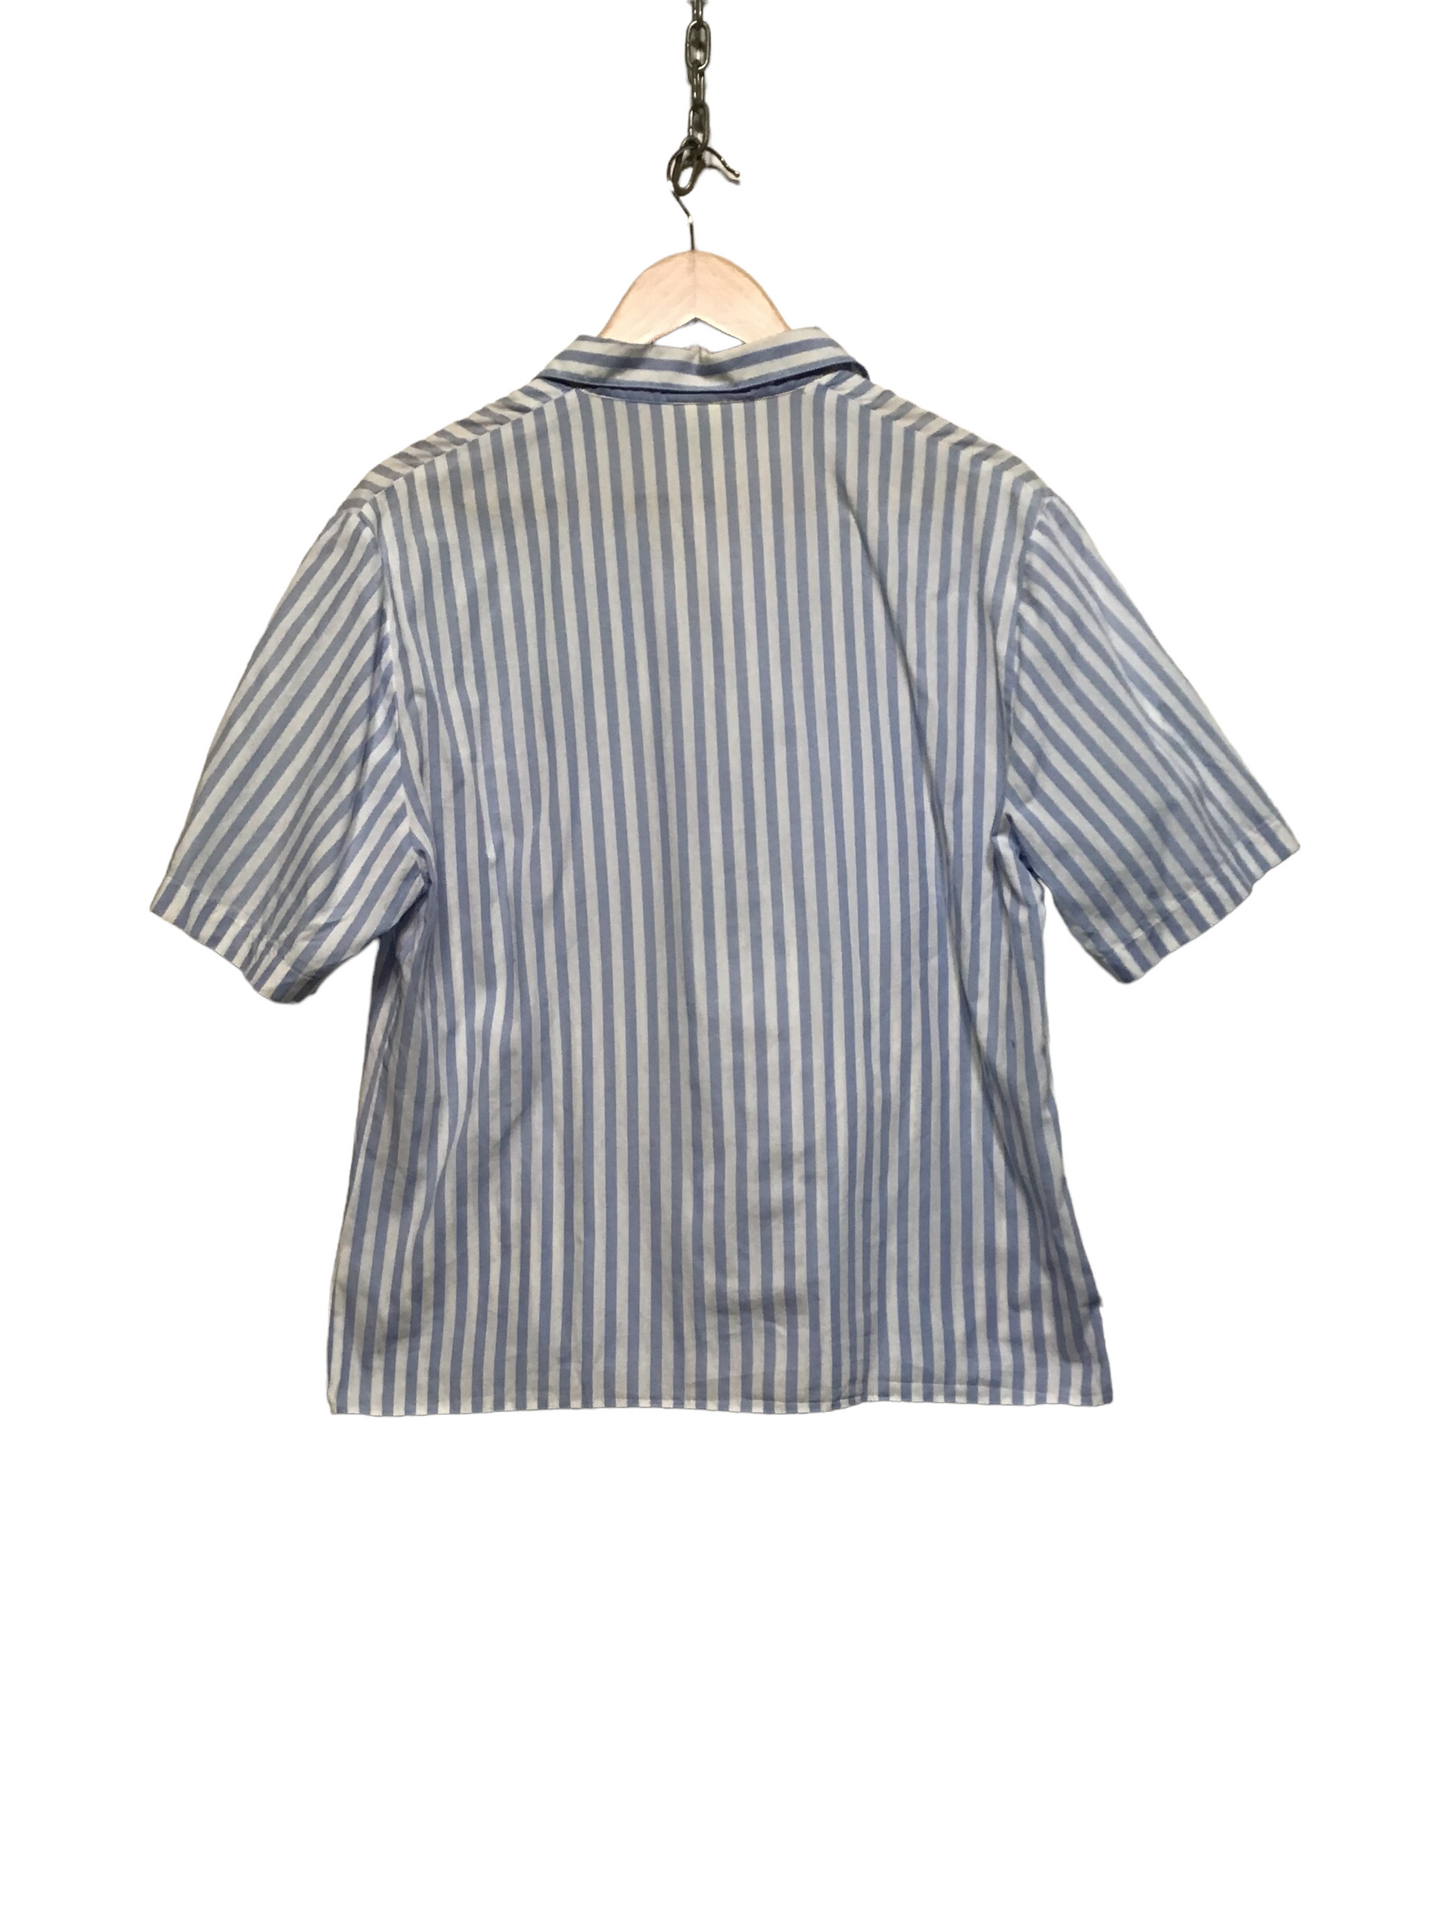 Womens Striped Shirt (Size L)